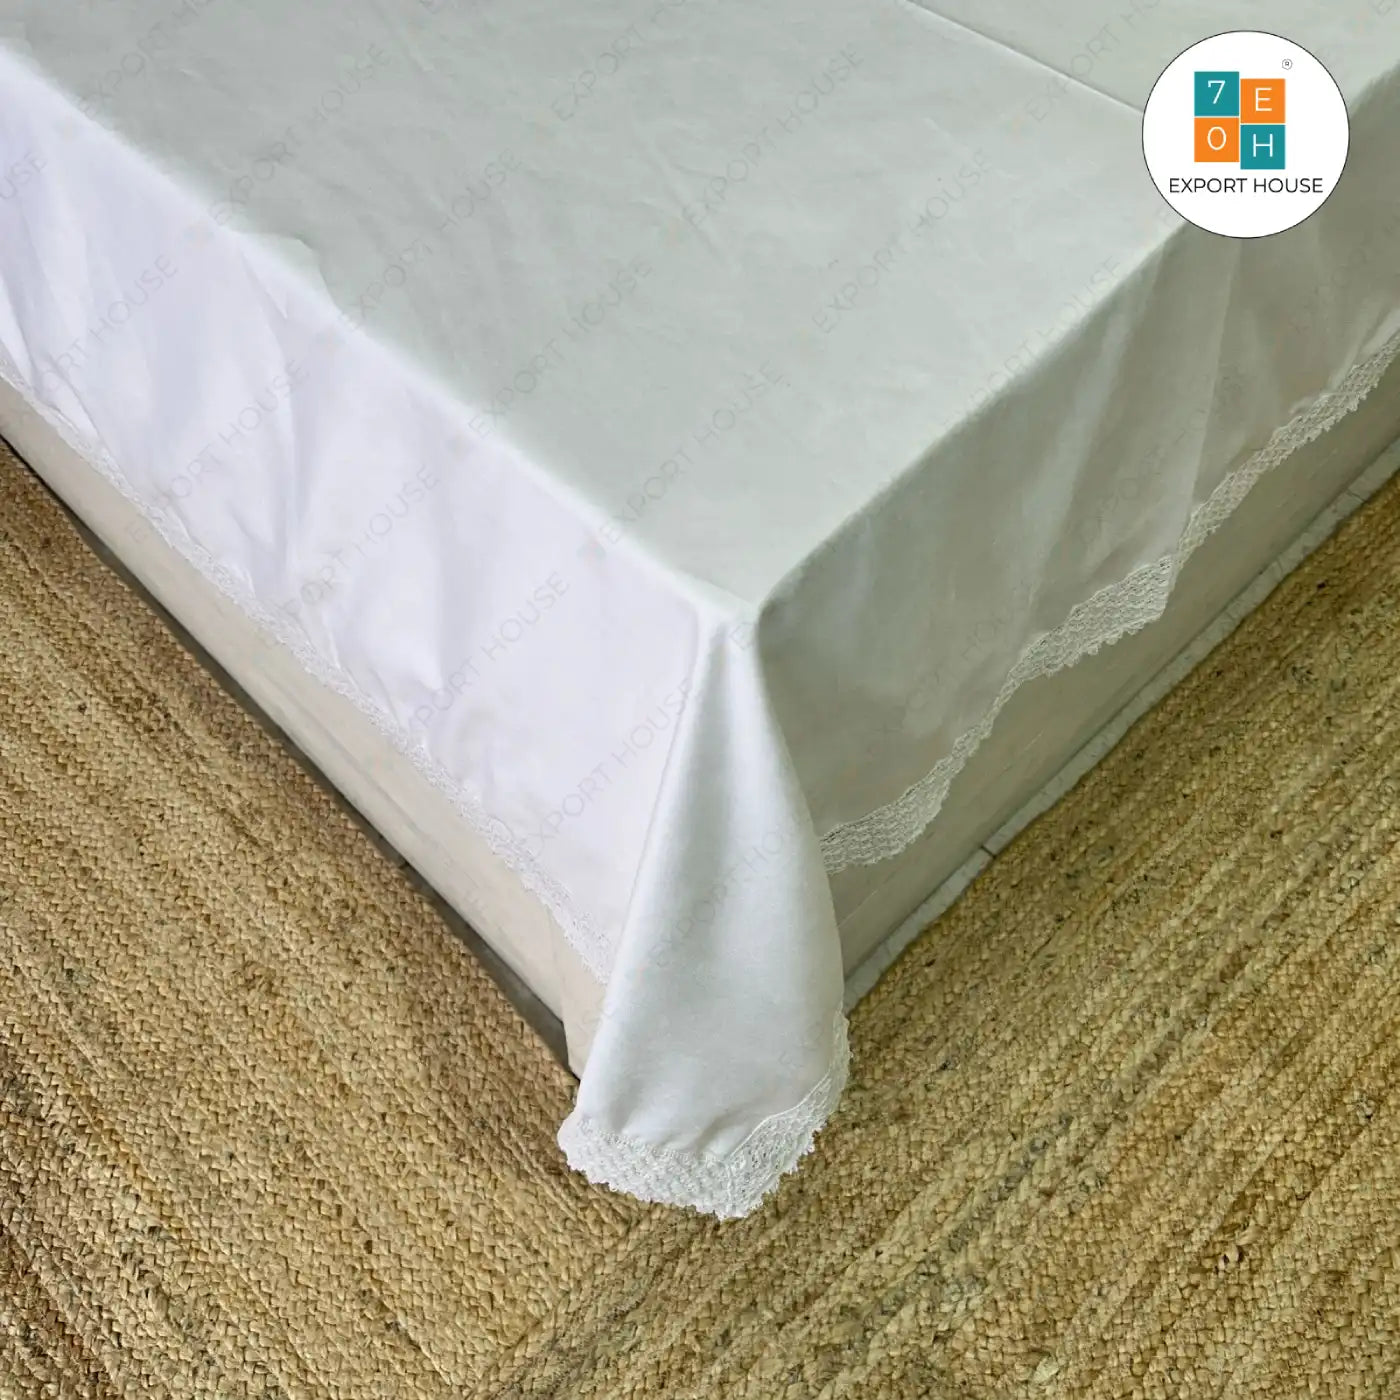 Cotton Dining Sheet 60x90: Luxurious 152cm x 228cm (60" x 90") Cotton Sheet in Elegant Plain Design